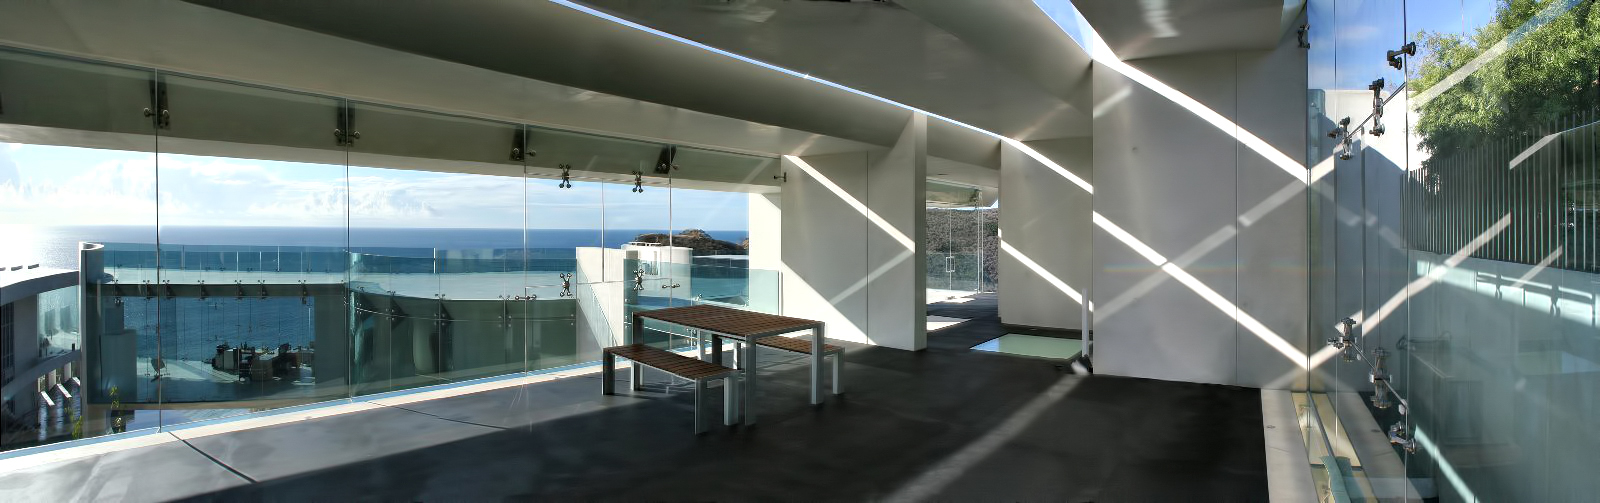 Inside The Razor – 11,000 sq. ft. California Masterpiece for $19.3 Million